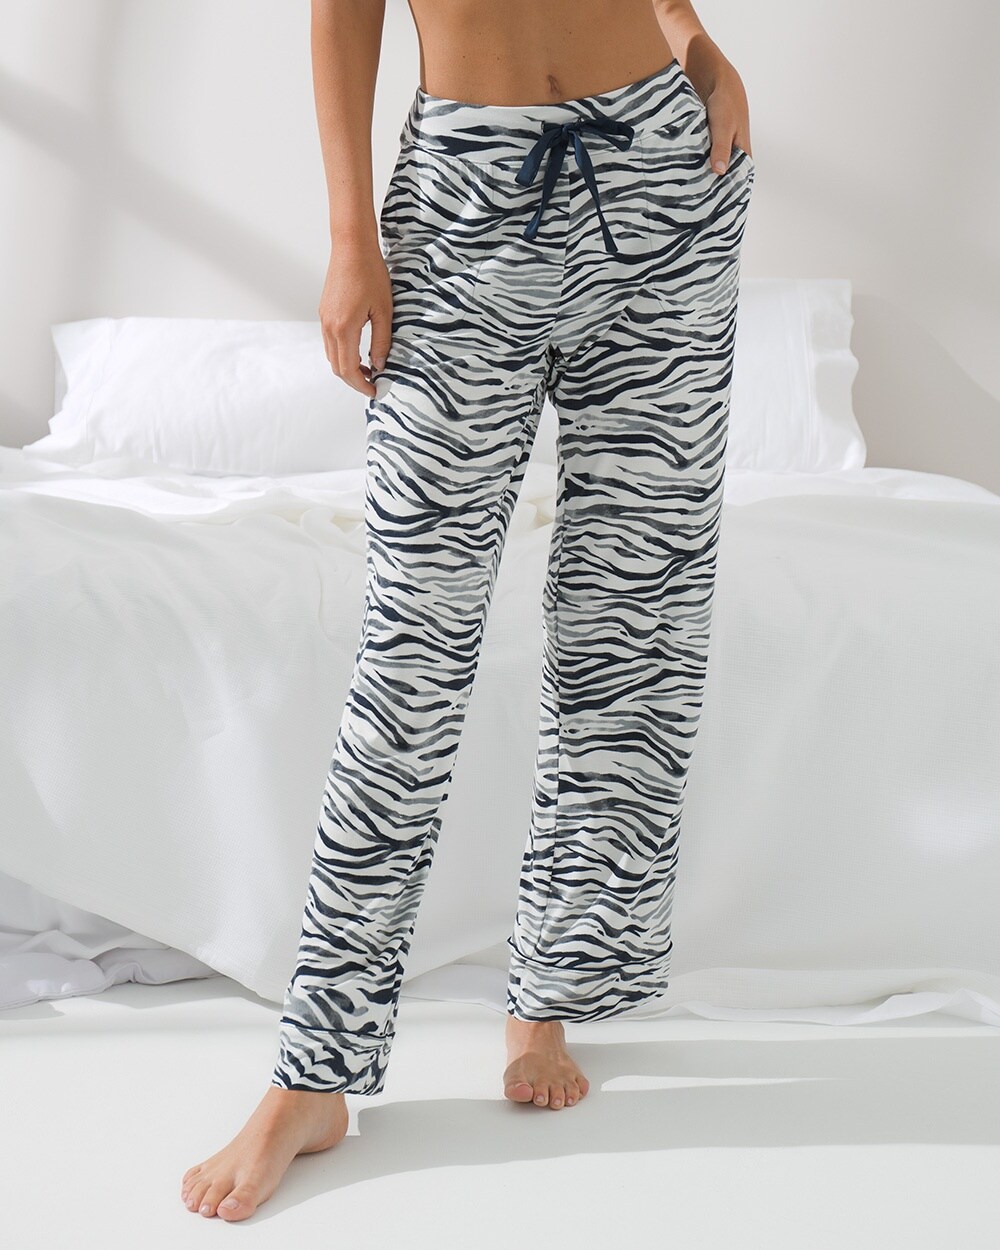 Cool Nights Satin Trim Pajama Pants